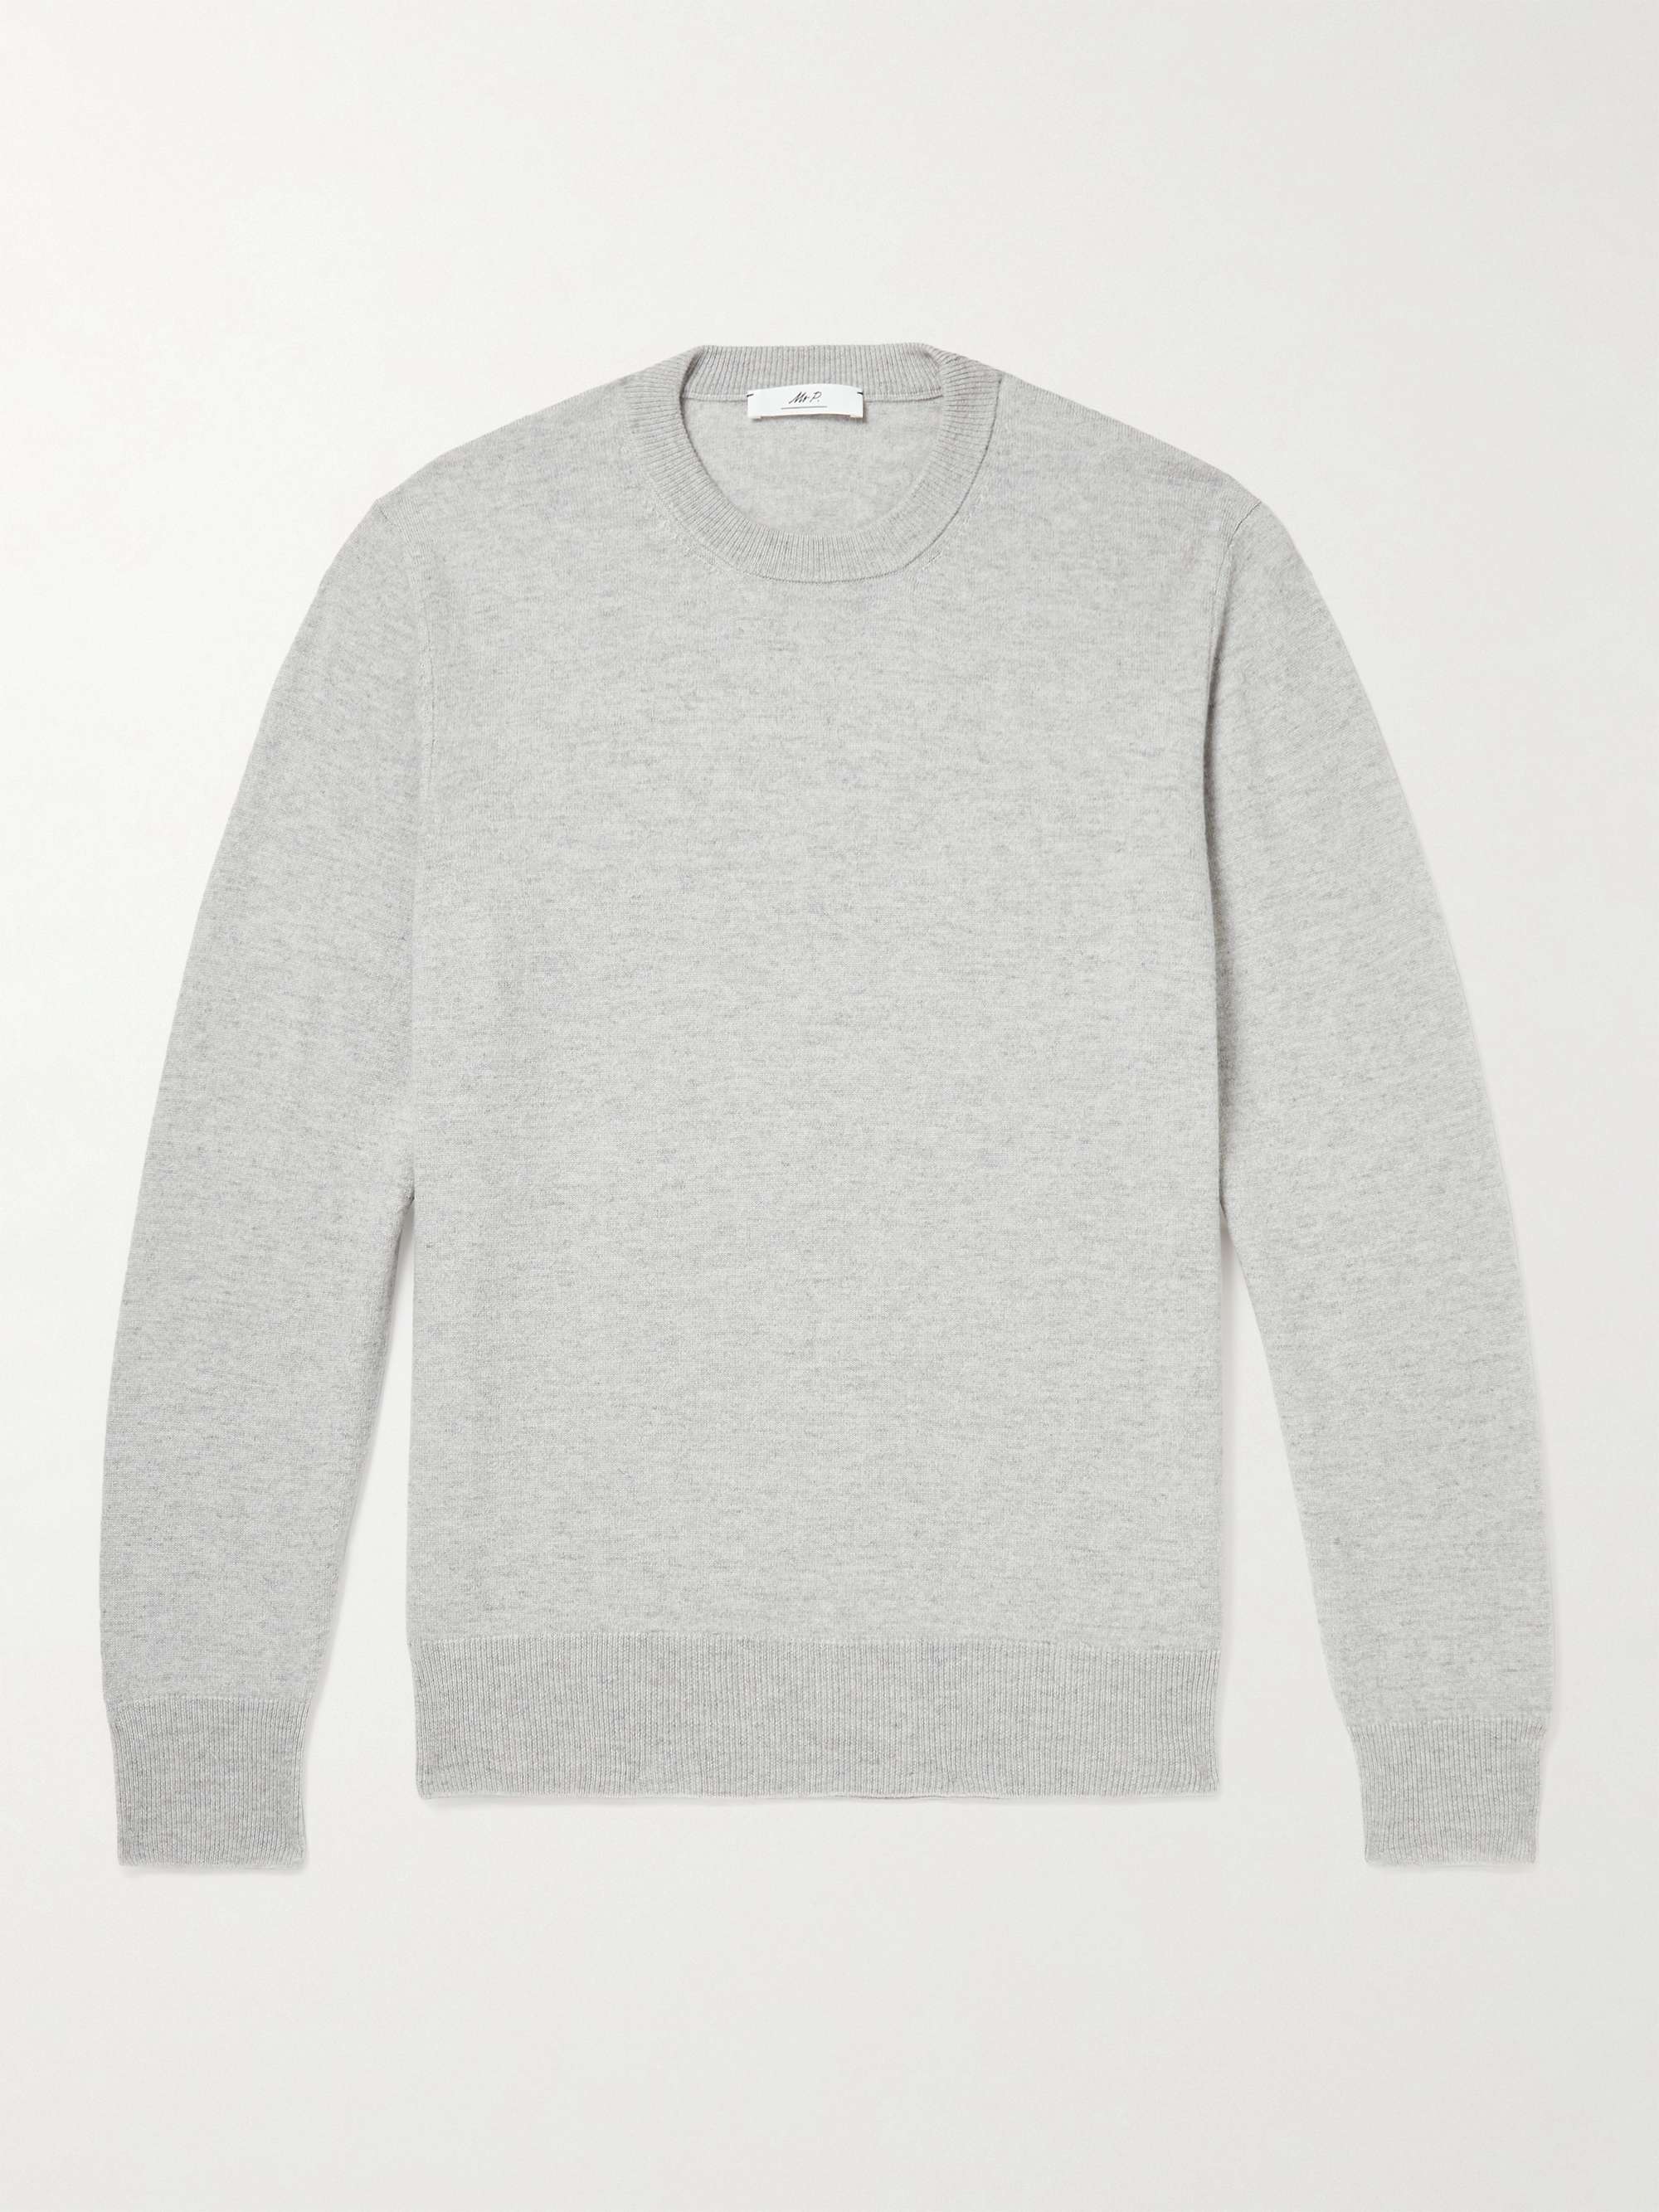 MR P. Wool and Cashmere-Blend Sweatshirt